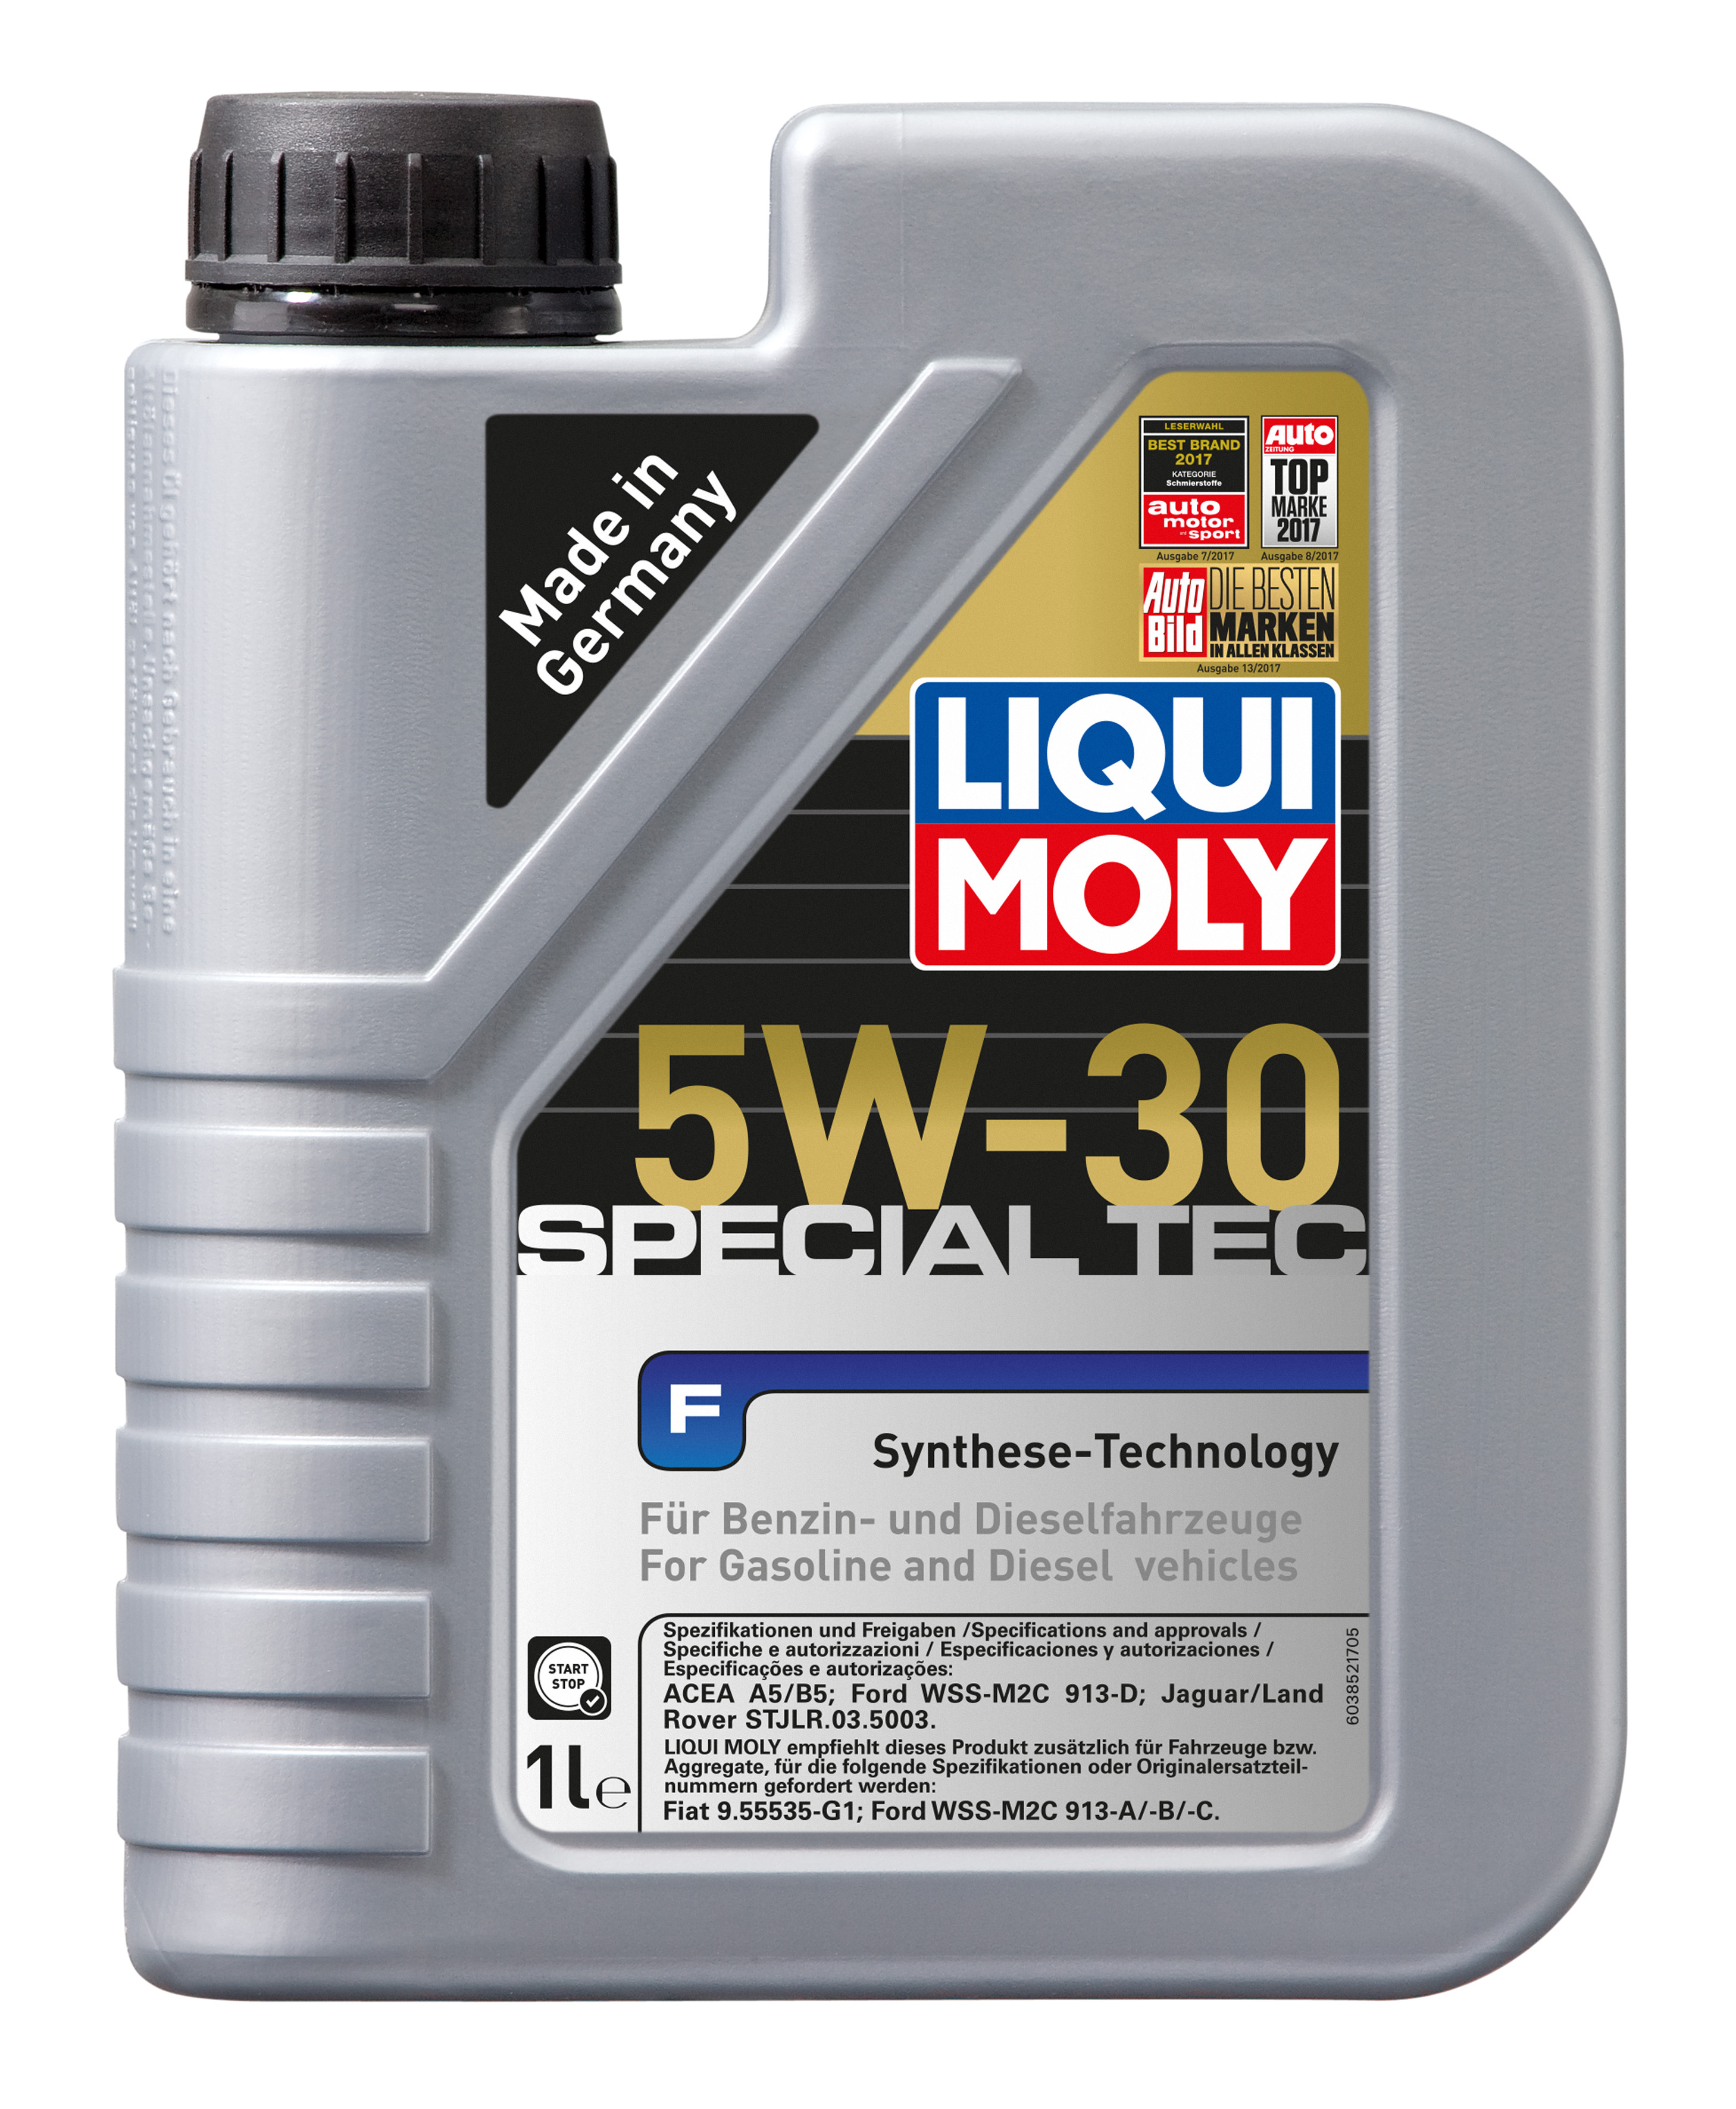  2325 LiquiMoly НС-синтетическое моторное масло Special Tec F 5W-30 1л 